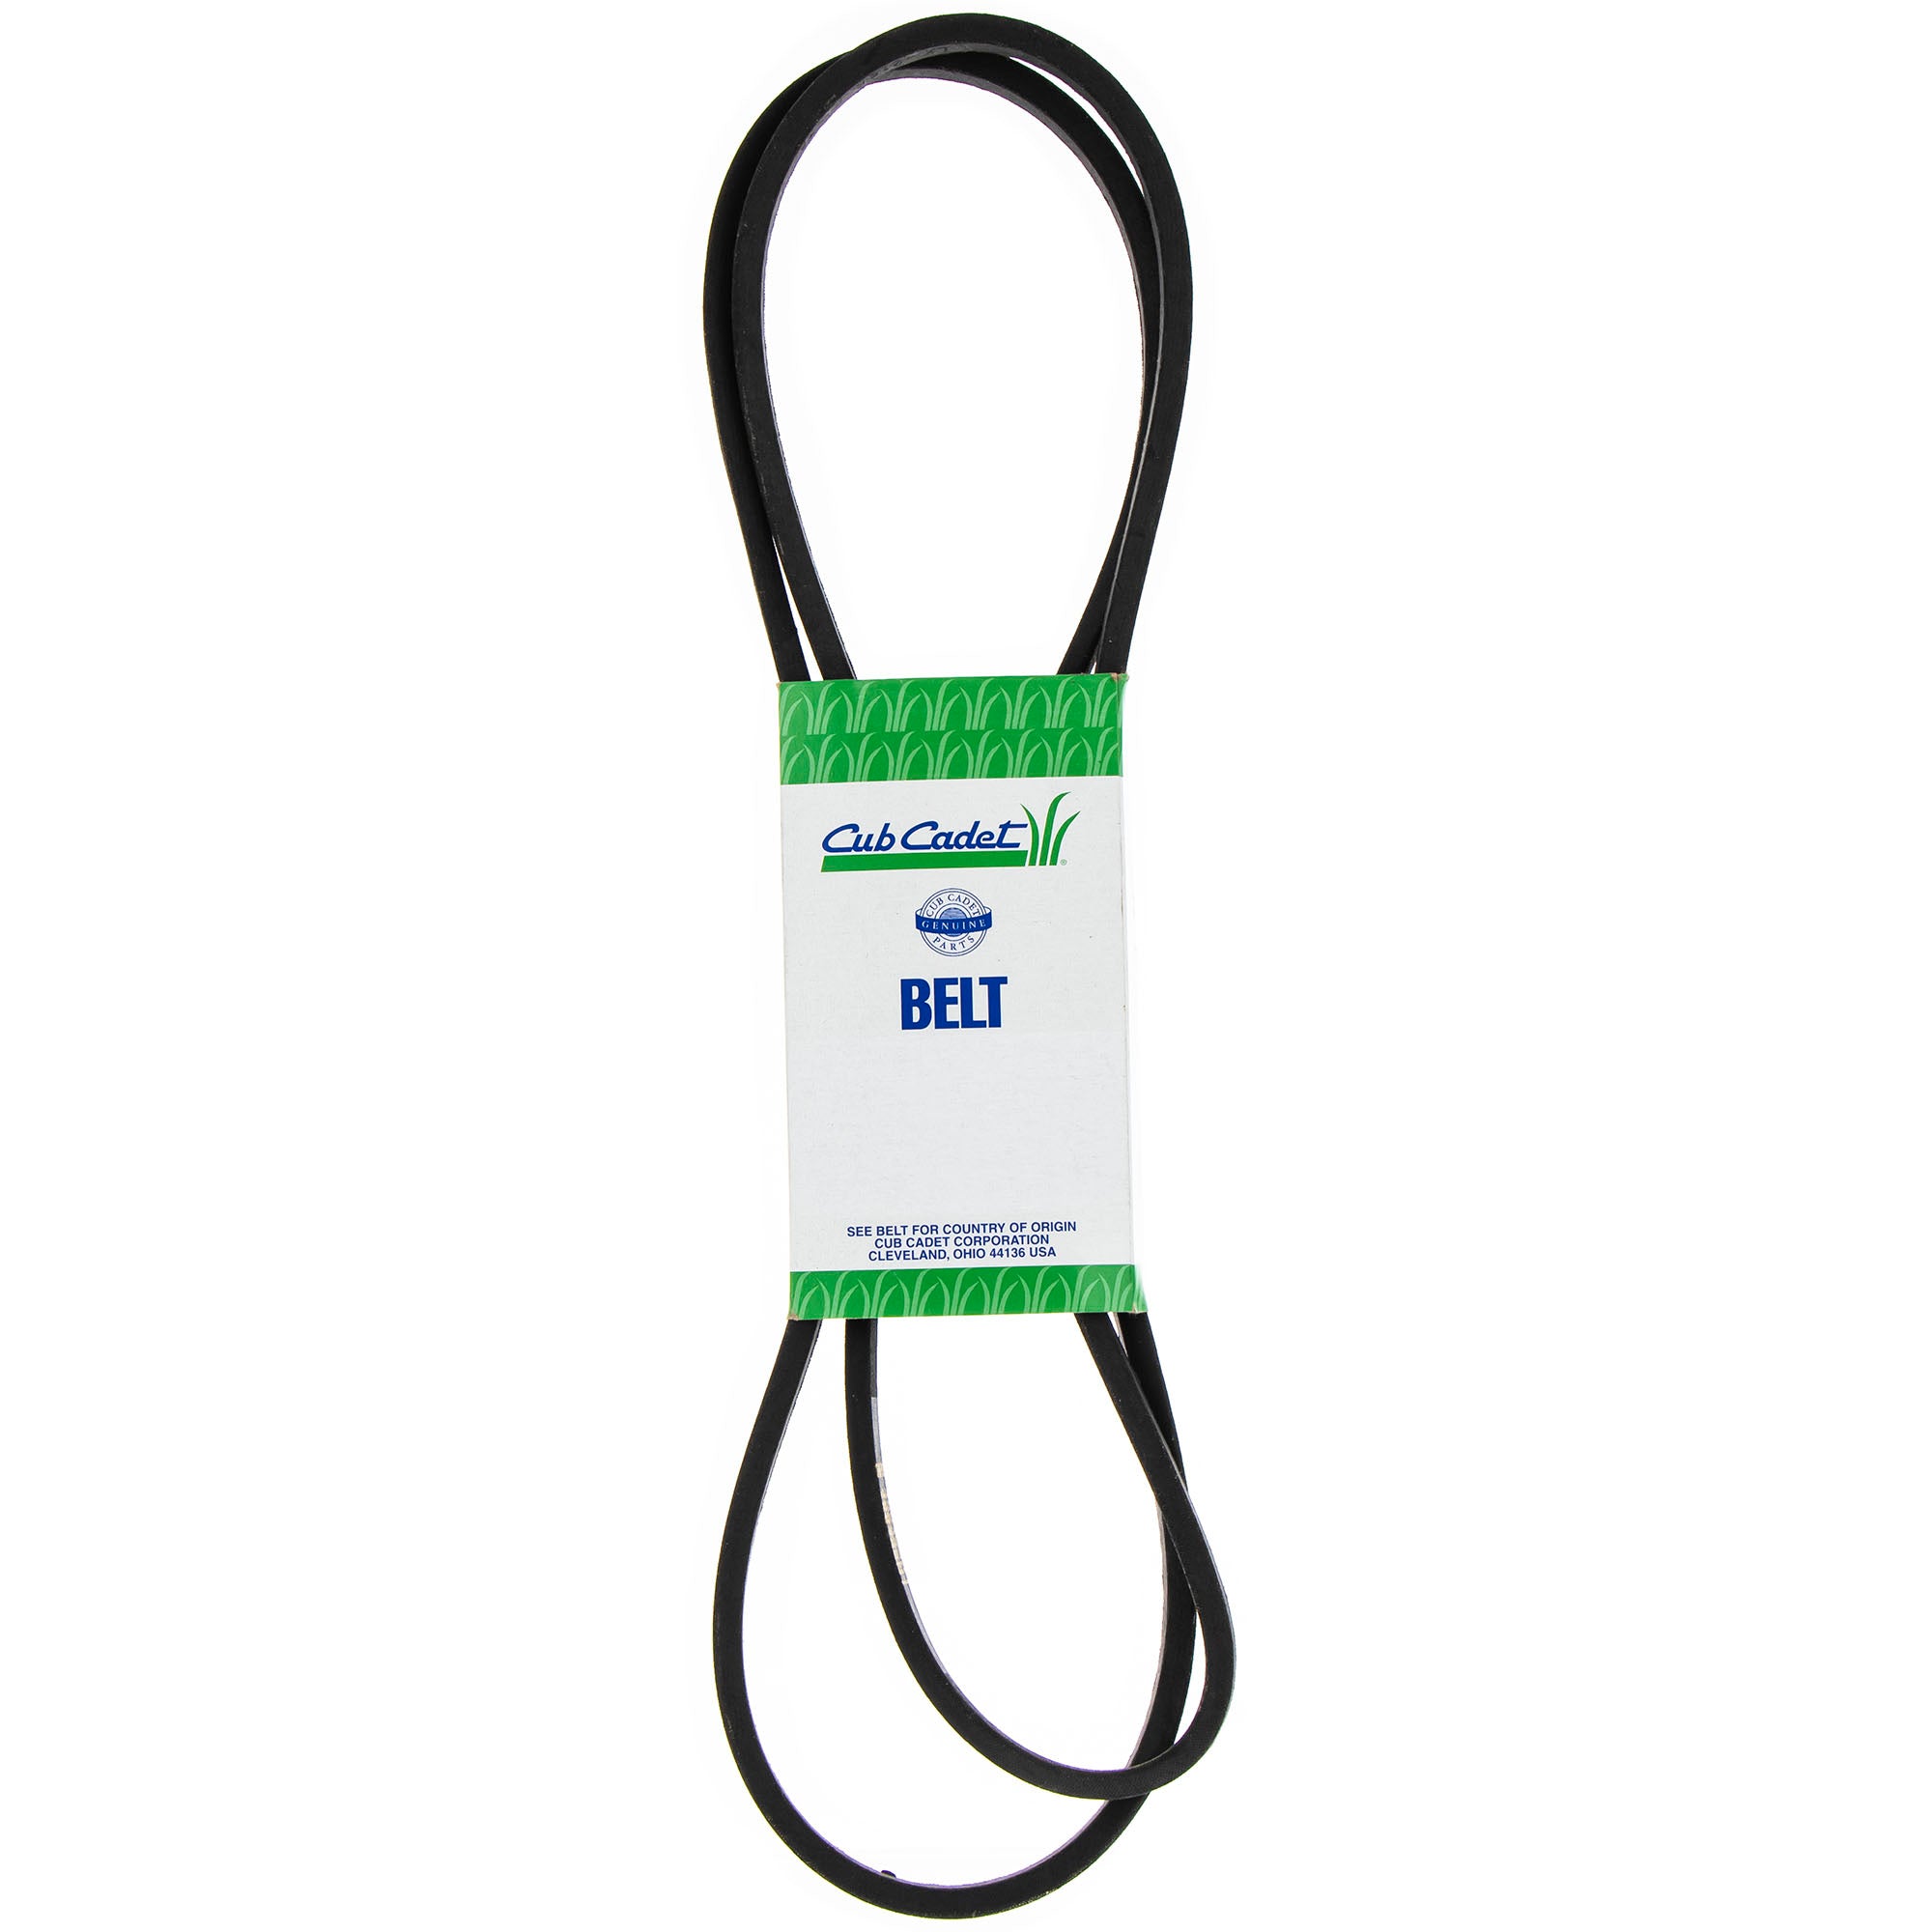 CUB CADET IH-489399-R1 Belt